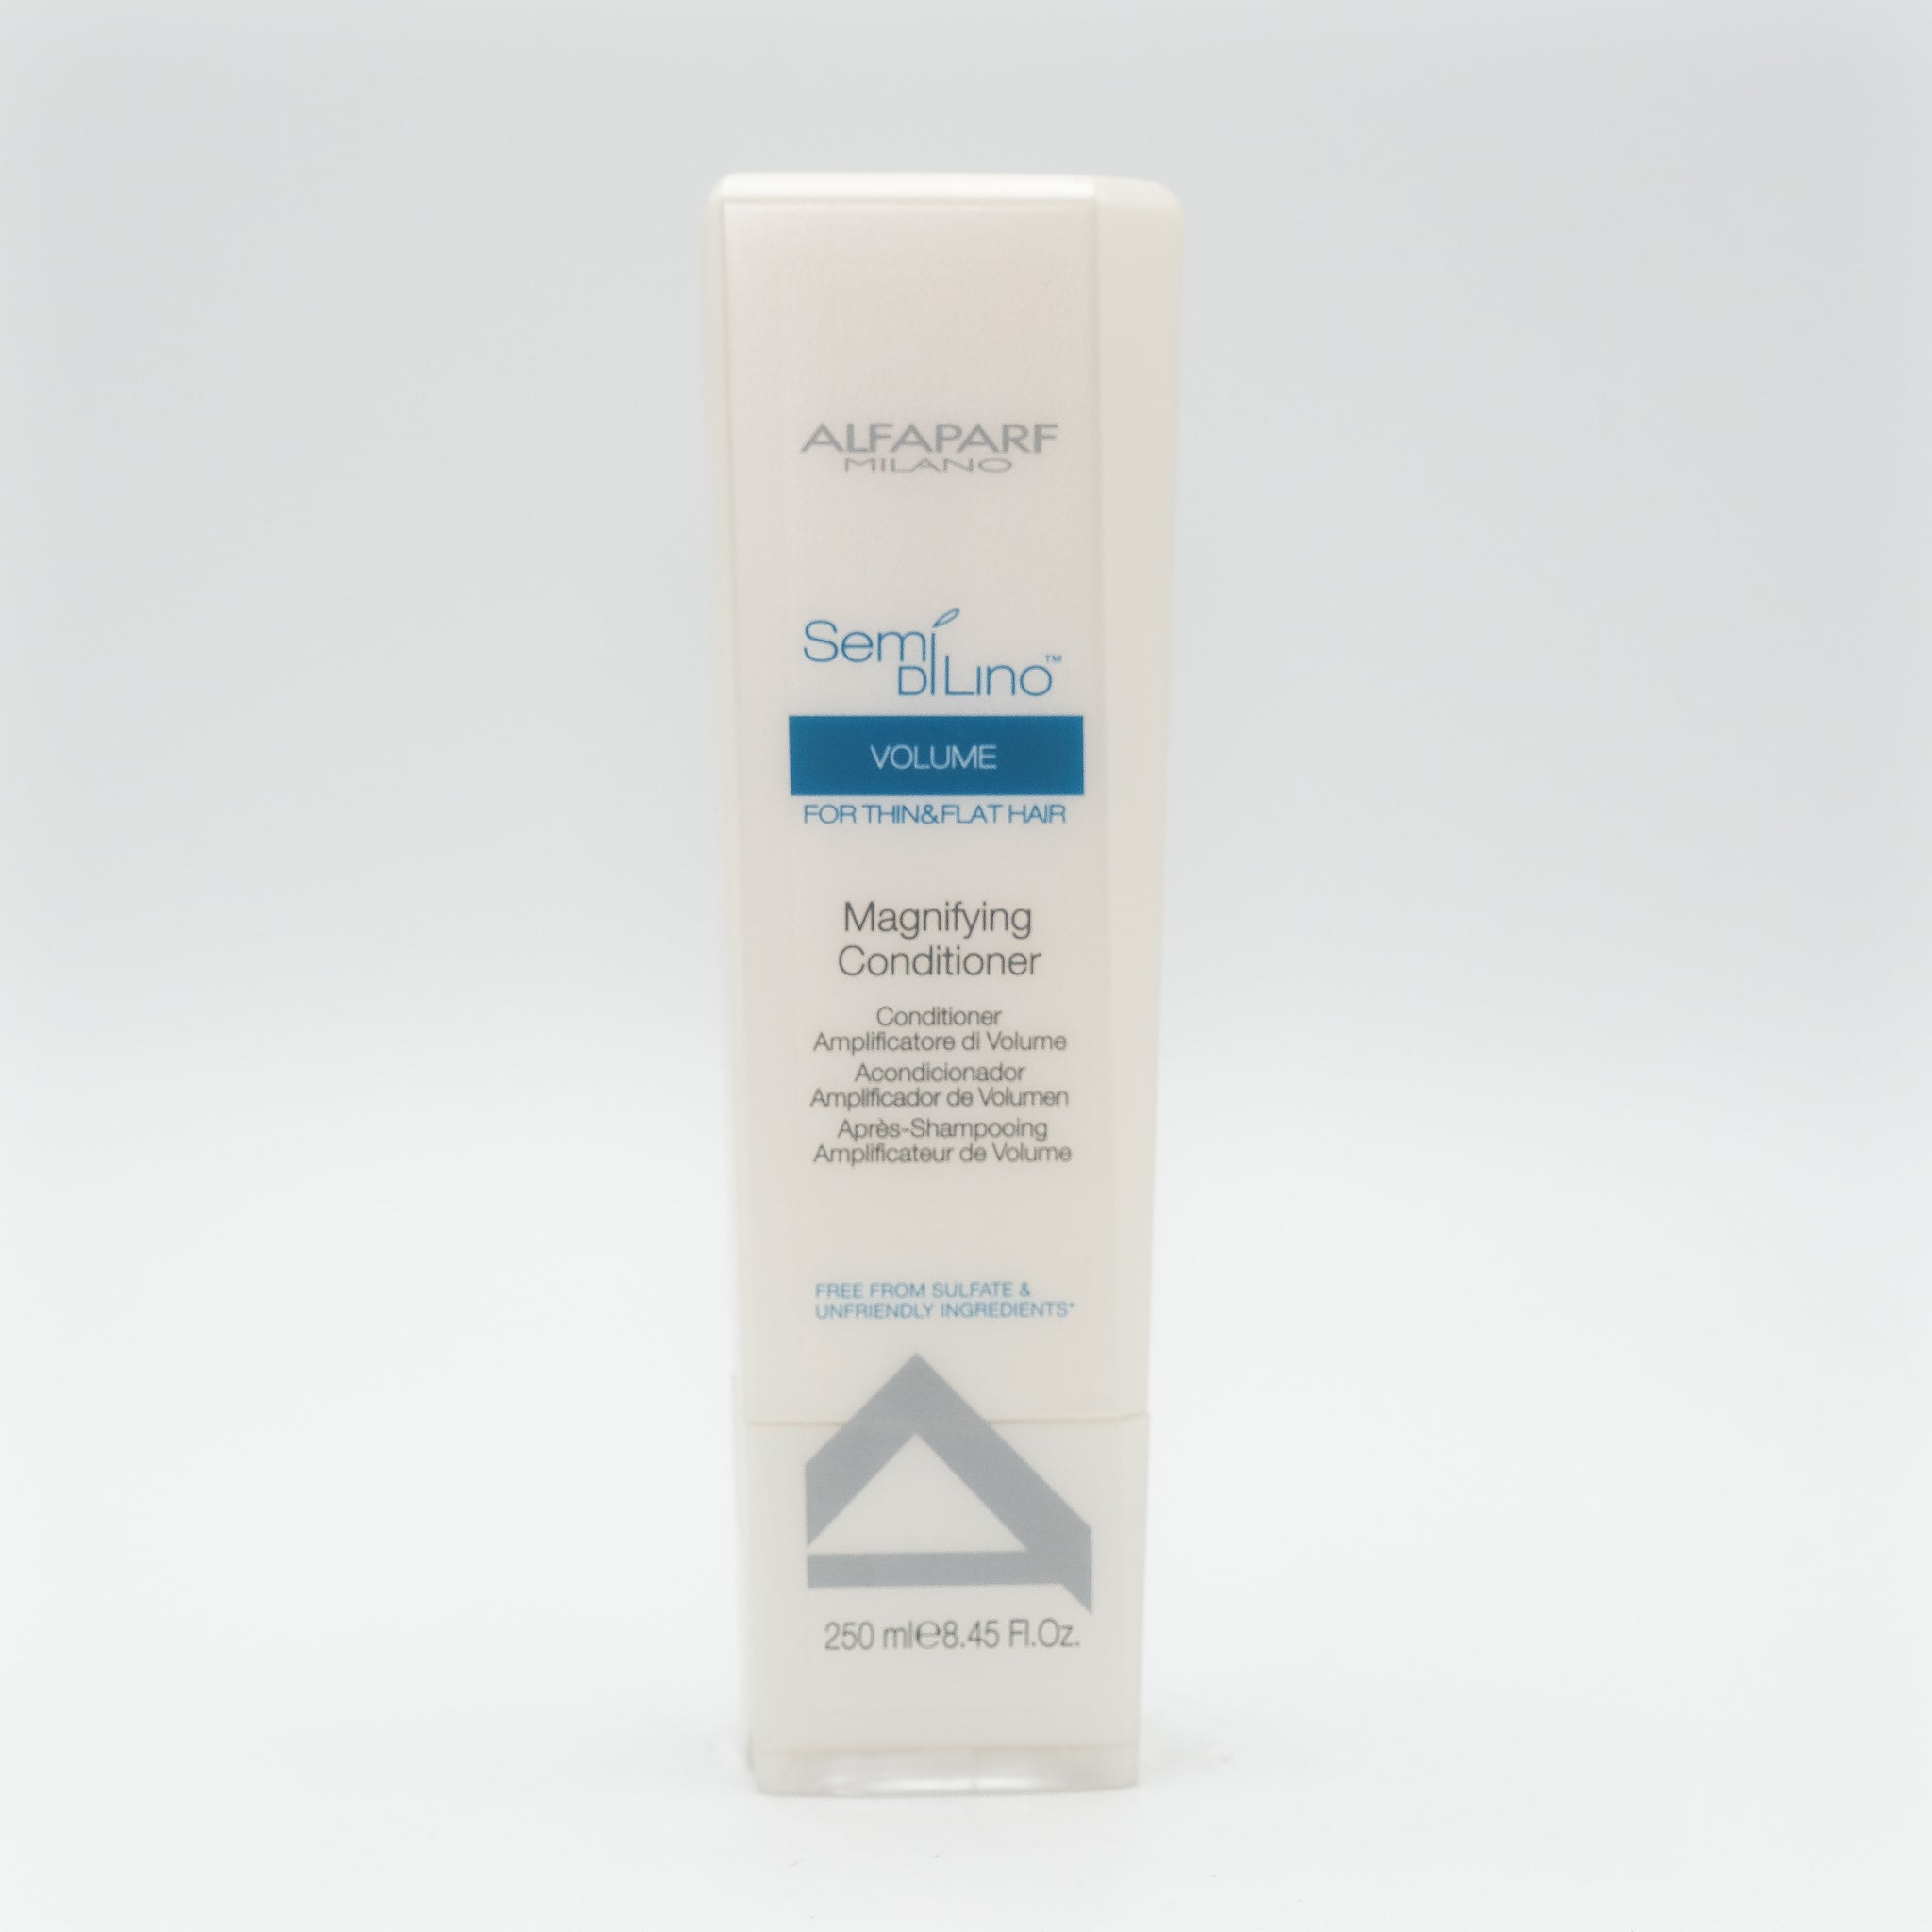 ALFAPARF Semi Dilino Volume Thin Hair & Flat Hair Magnifying Conditioner 8.45 oz